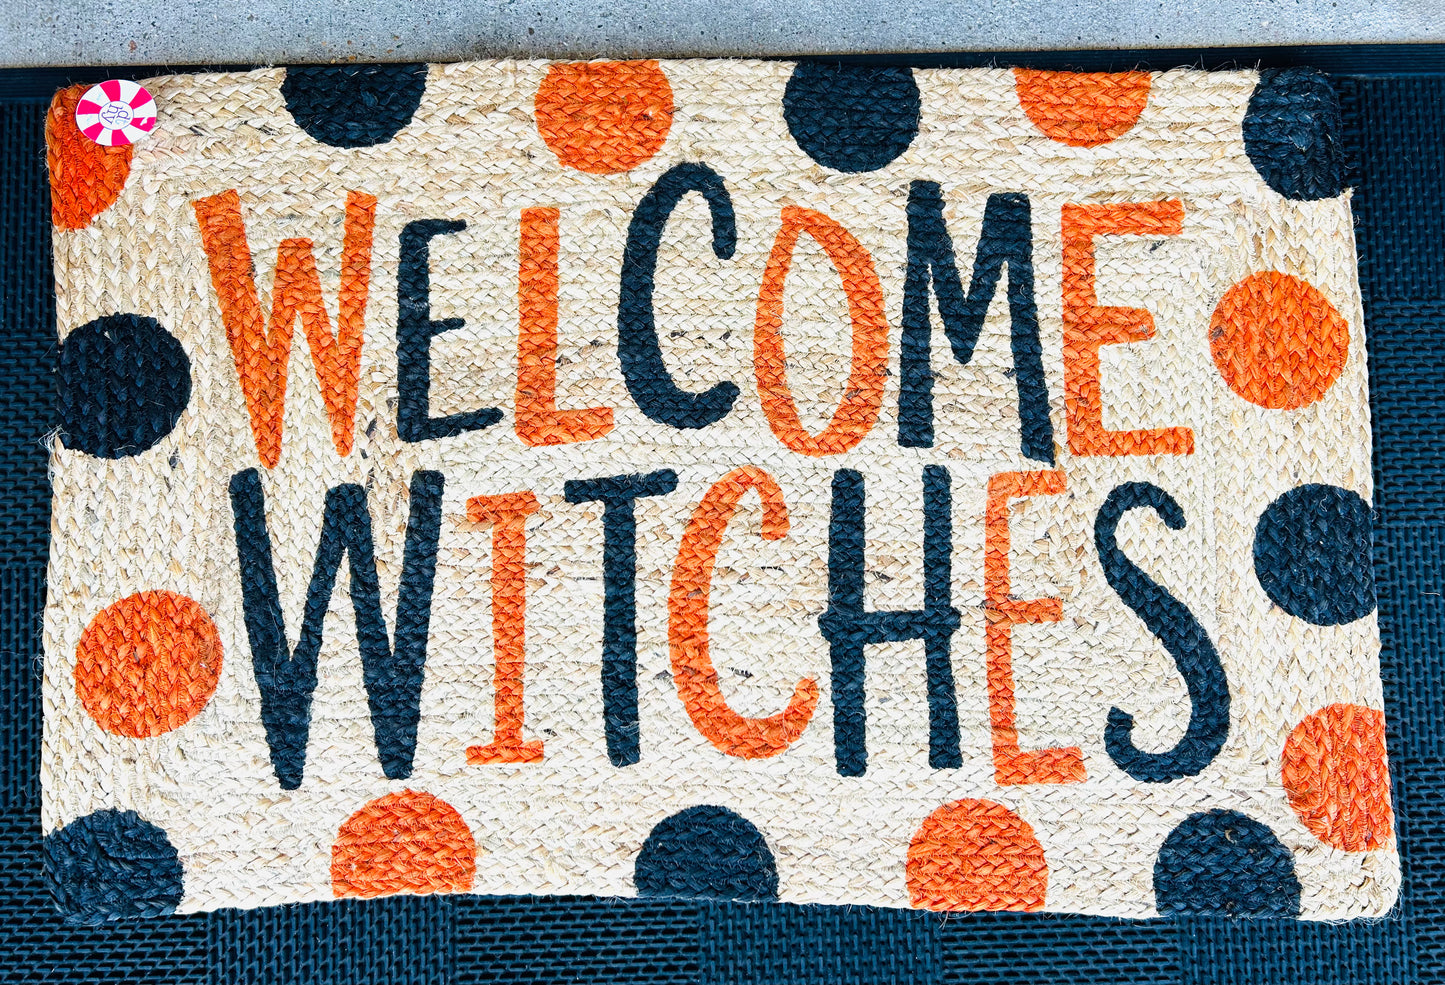 Welcome Witches Doormat